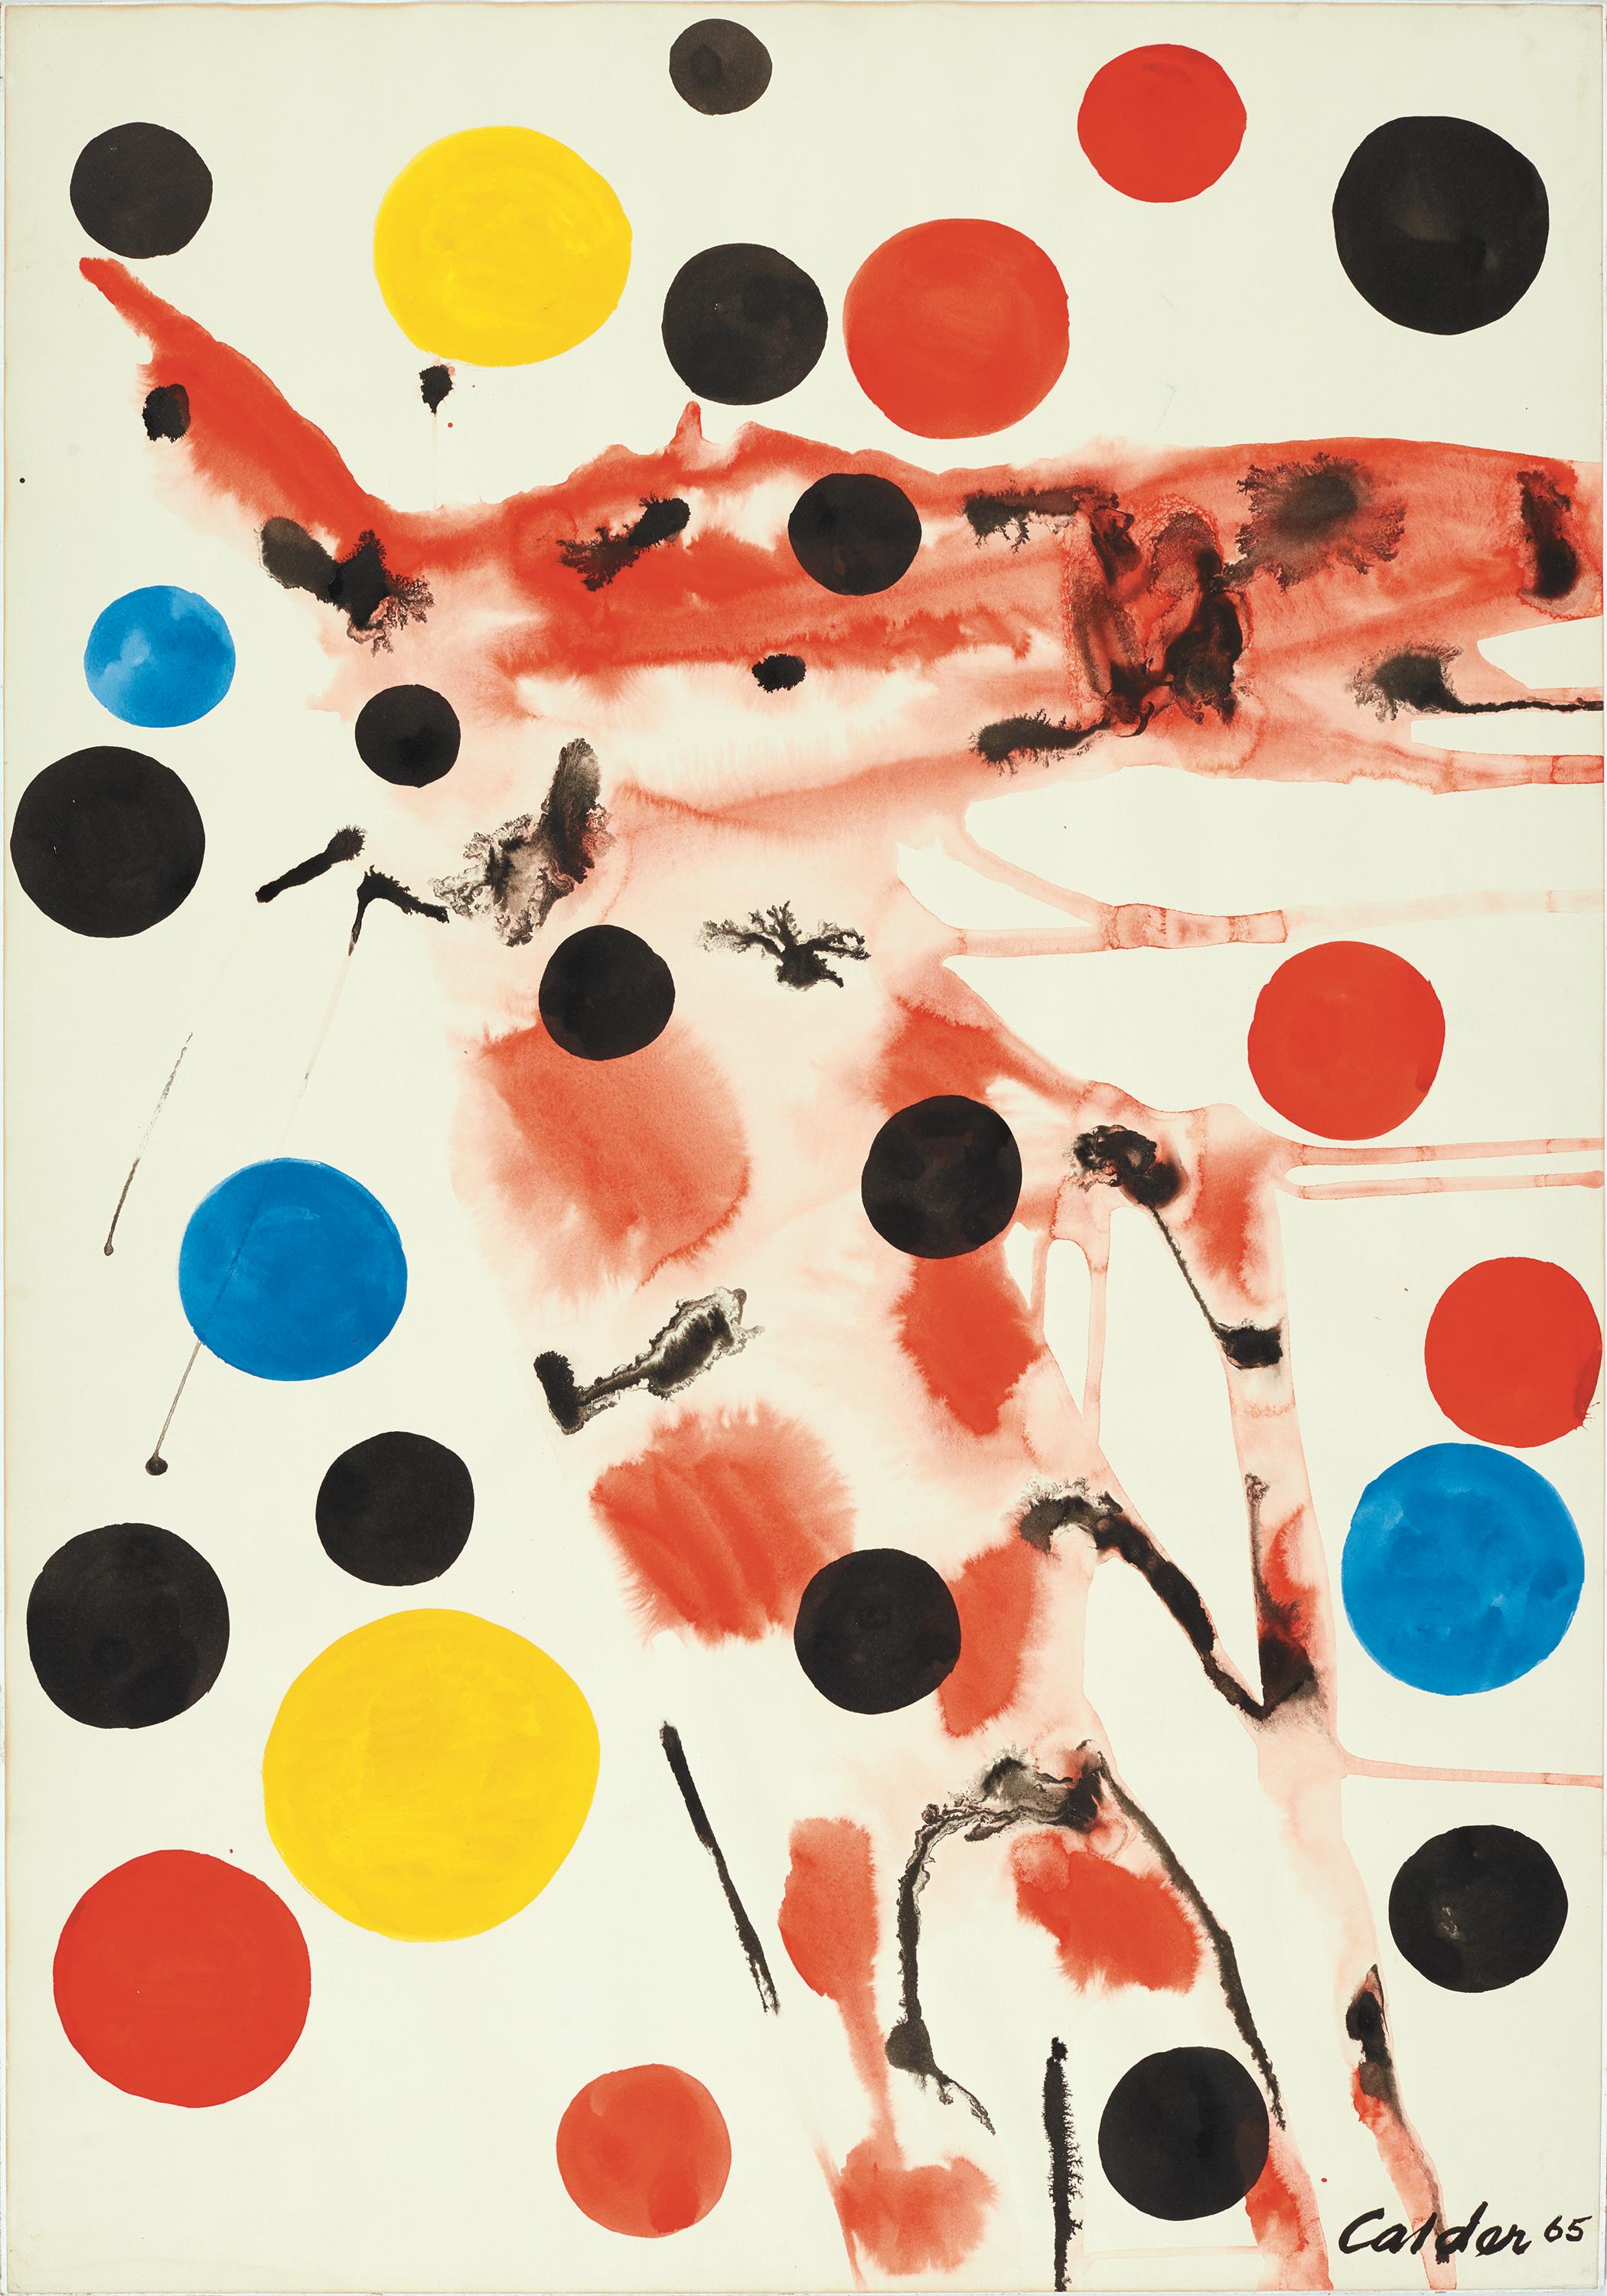 What was Alexander Calder best known for?